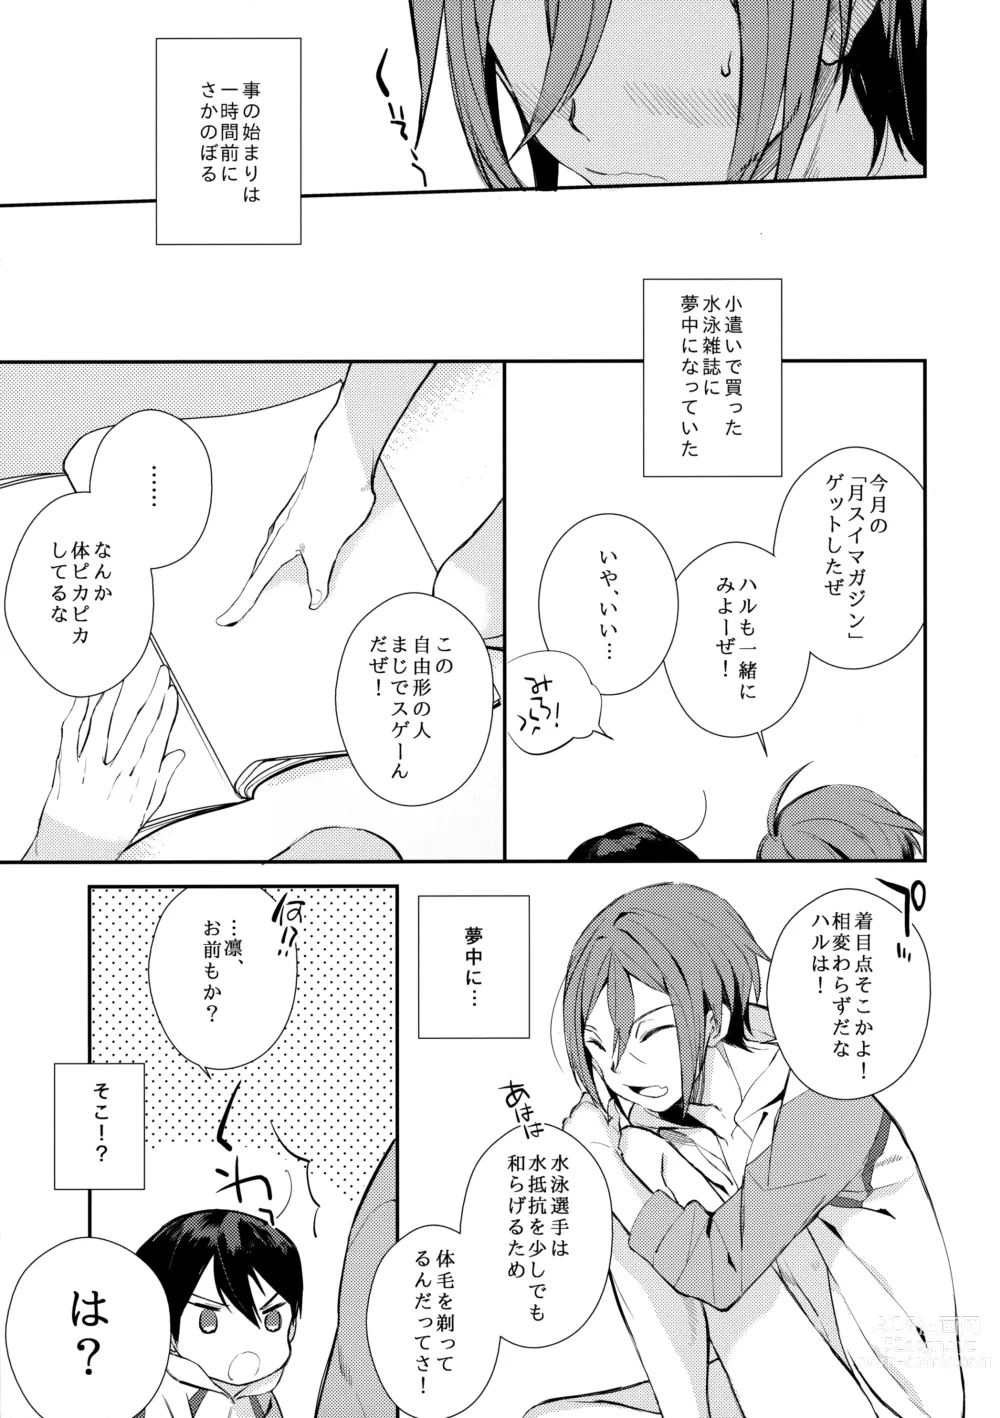 Page 6 of doujinshi Honto Muri!